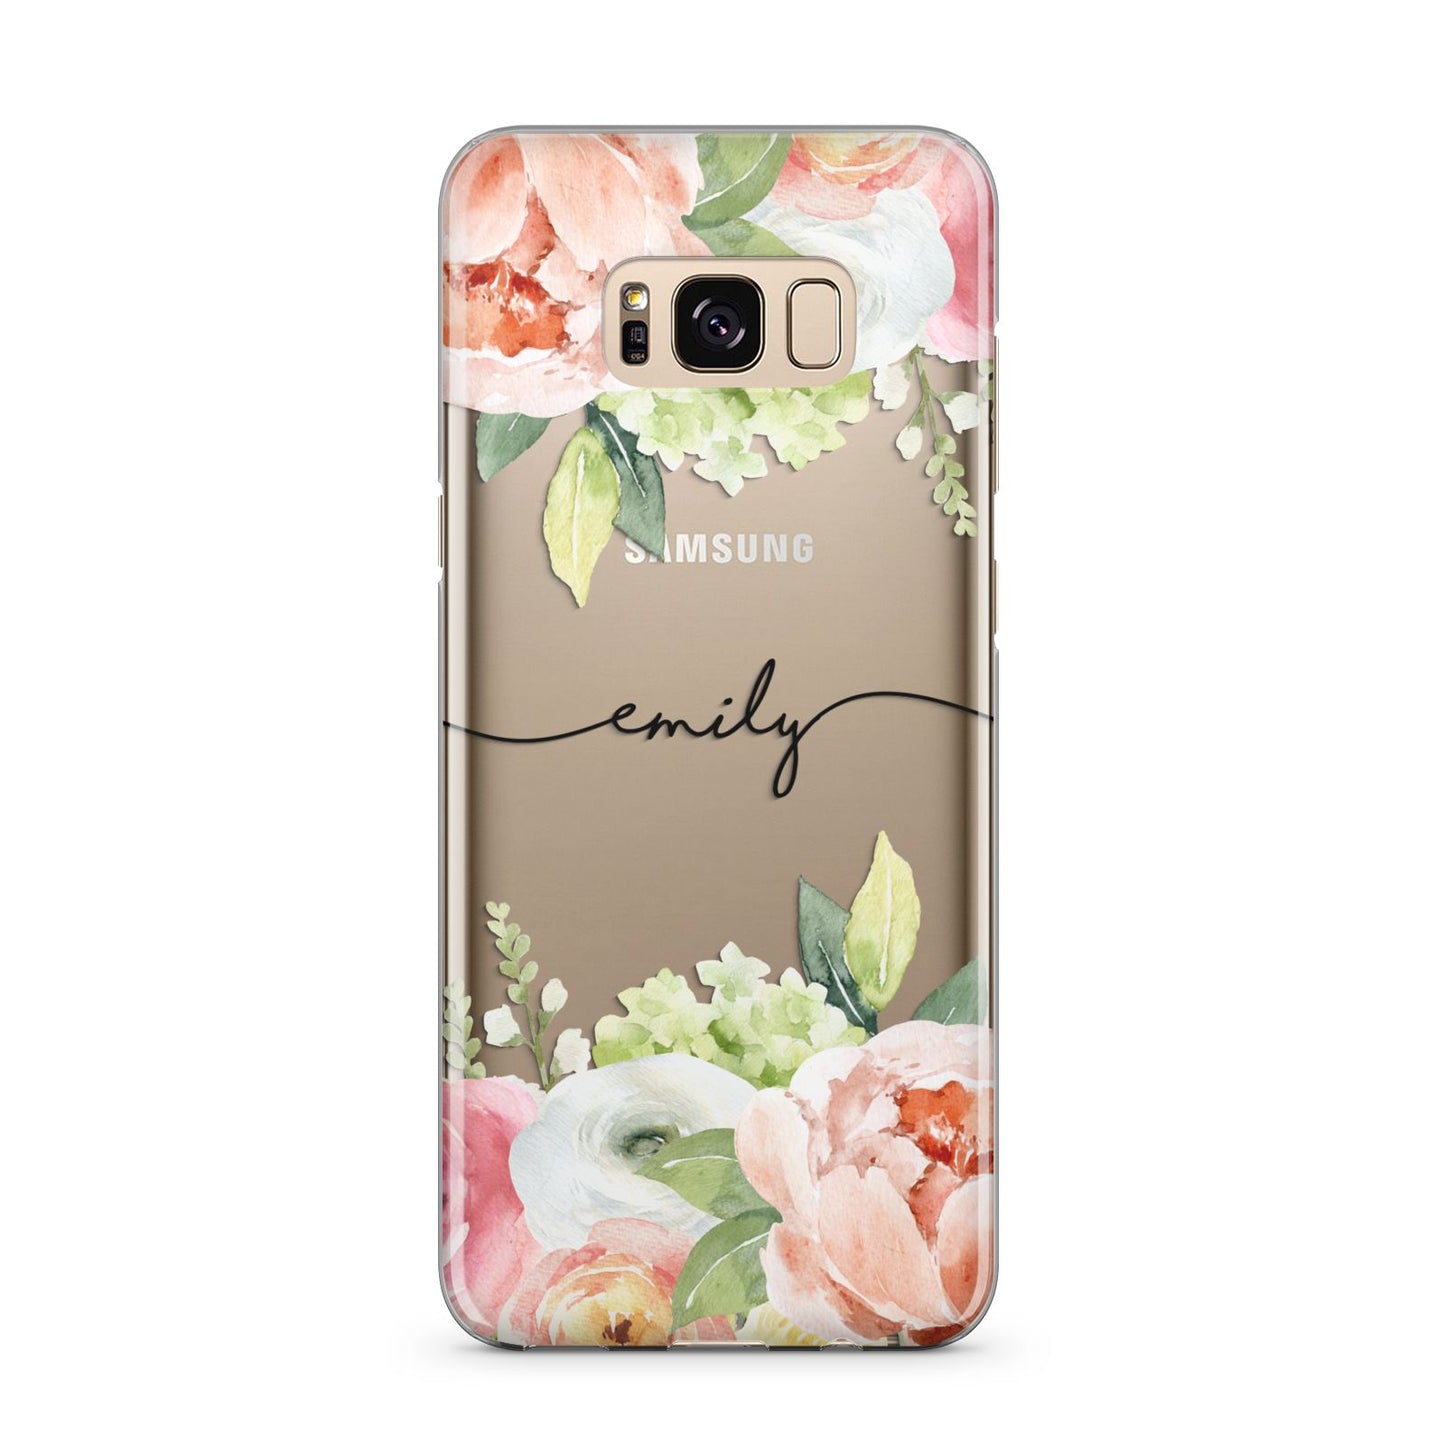 Personalised Flowers Samsung Galaxy S8 Plus Case